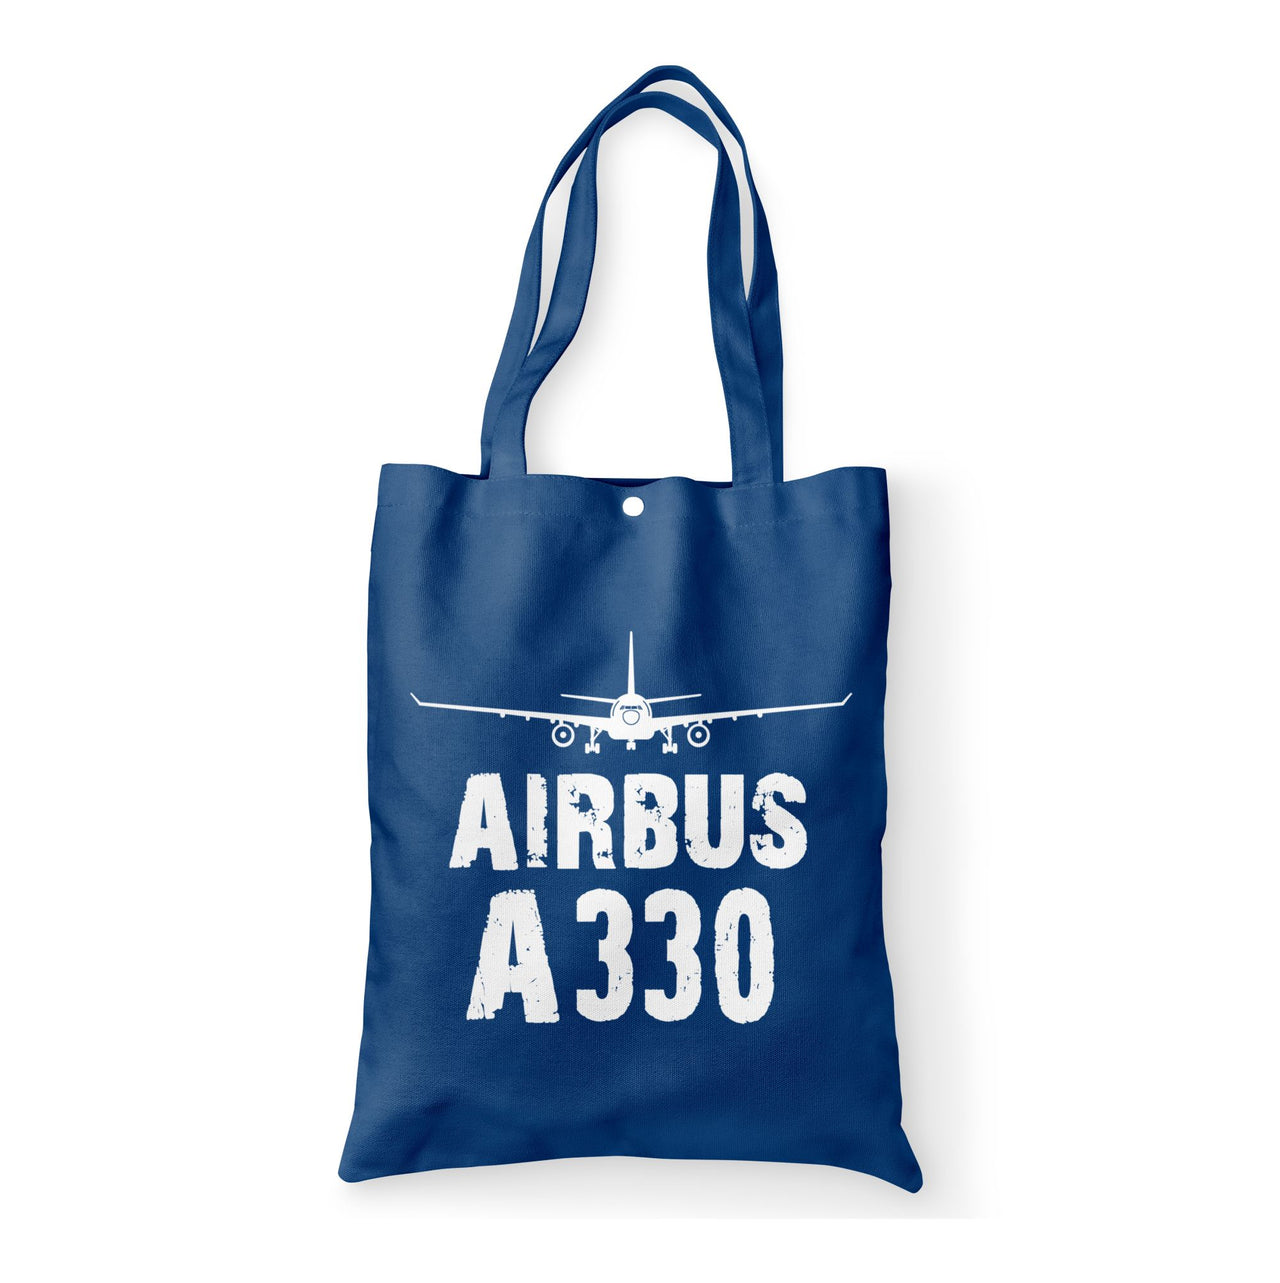 Airbus A330 & Plane Designed Tote Bags